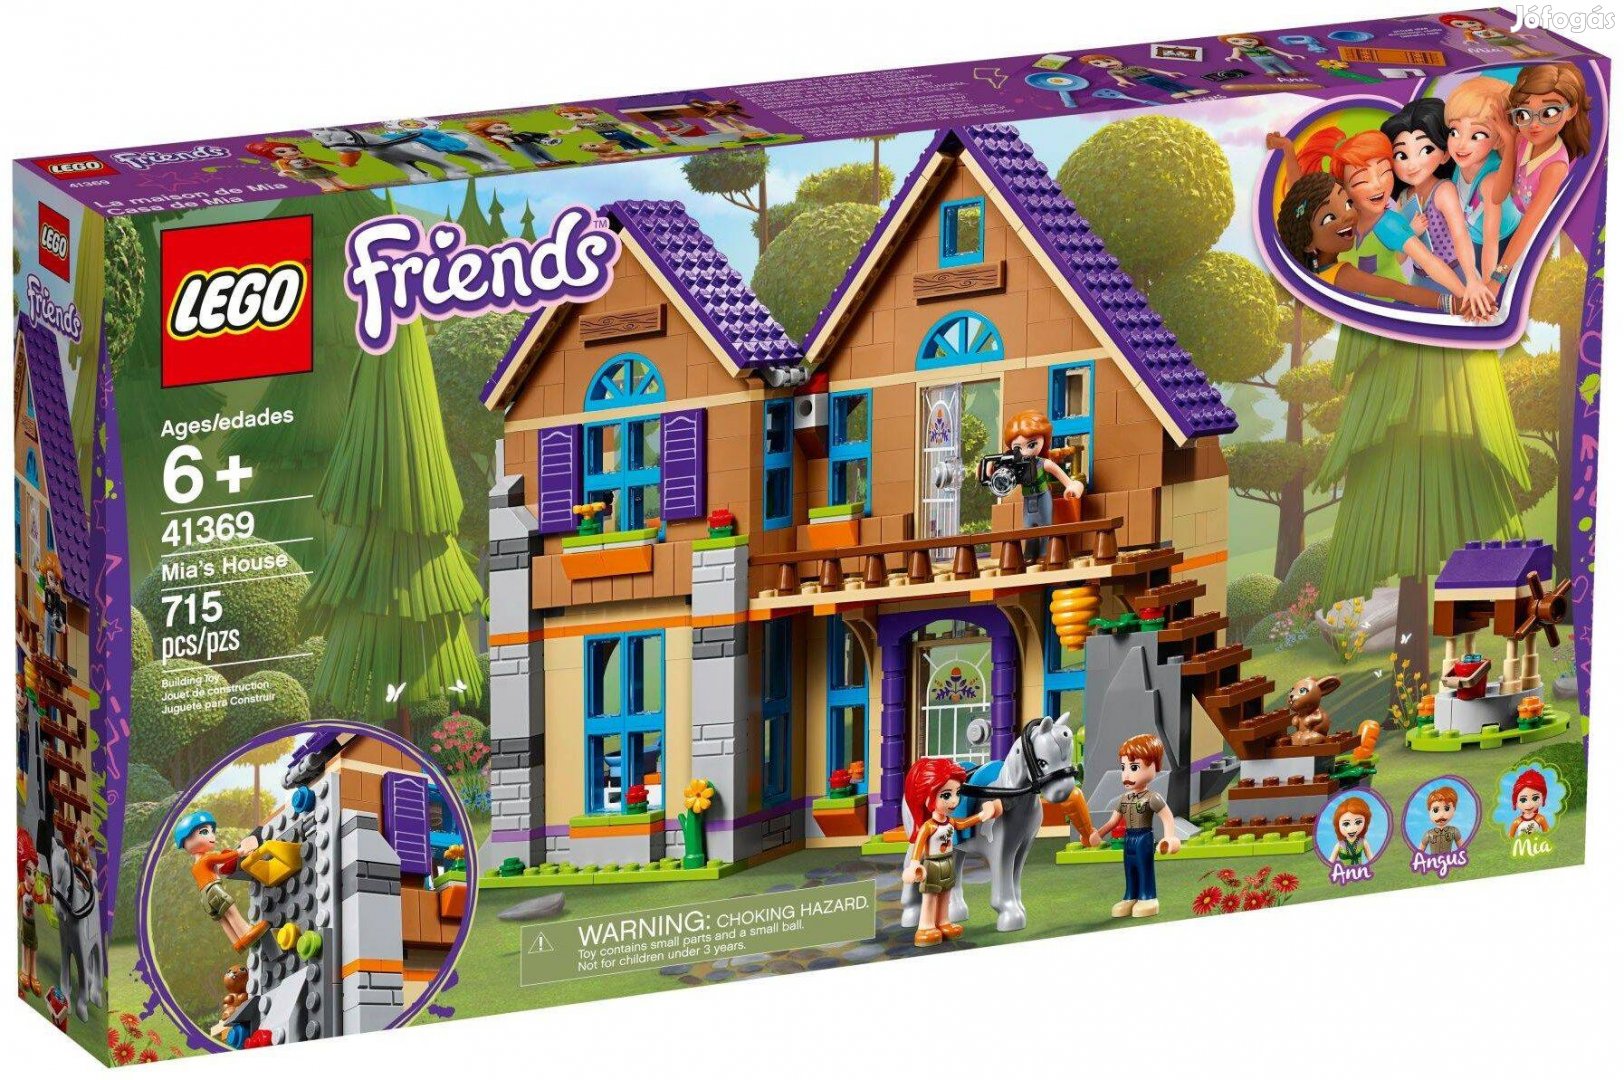 LEGO Friends 41369 Mia's House bontatlan, új